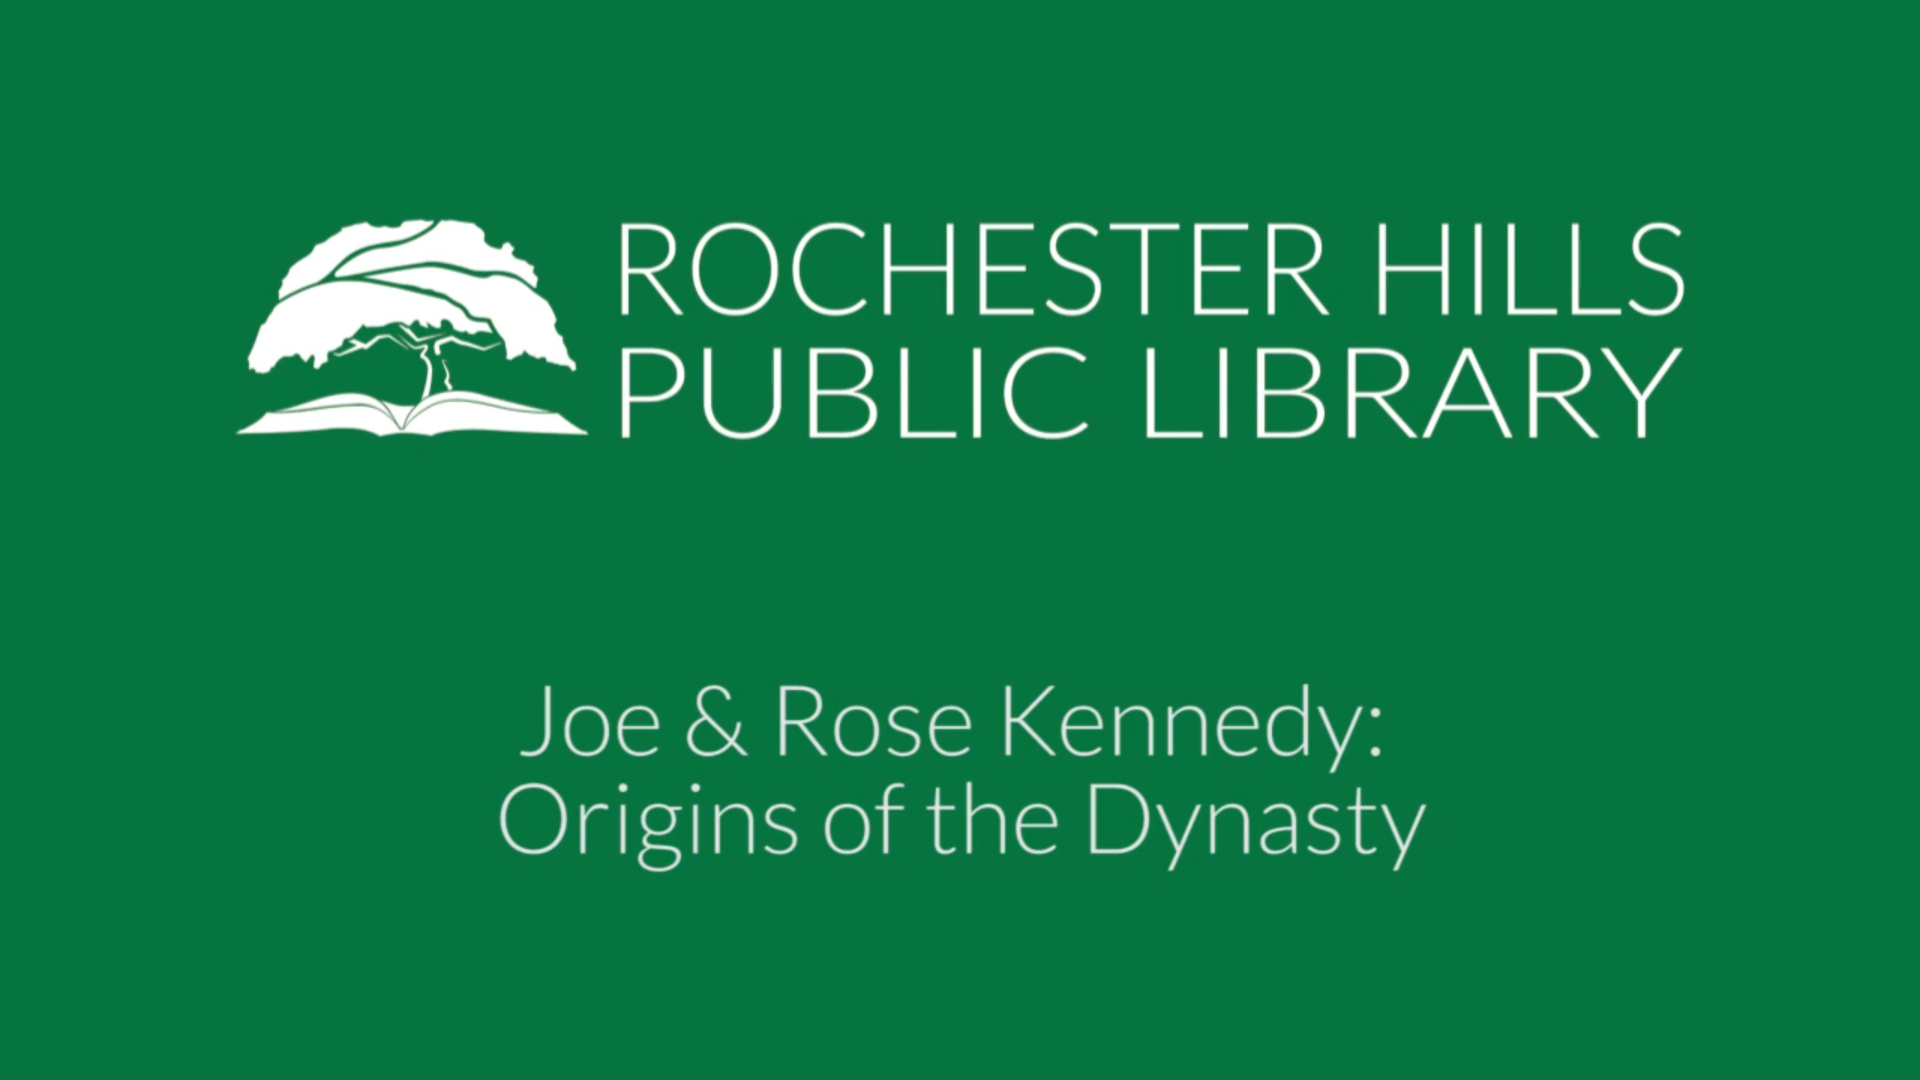 Joe & Rose Kennedy: Origins of the Dynasty